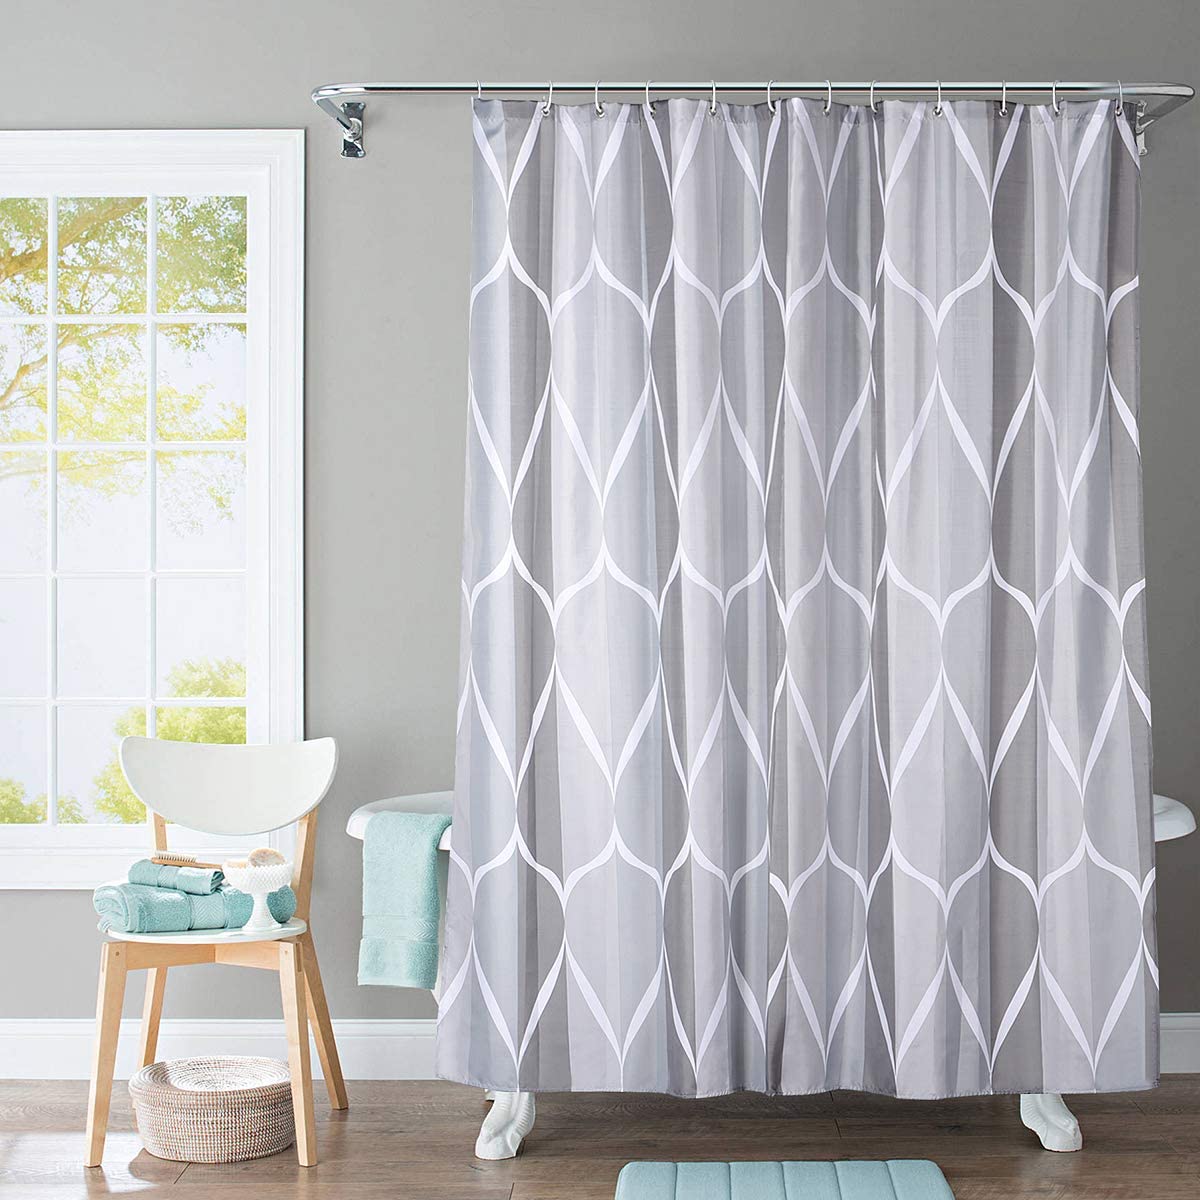 JRing Machine Washable Polyester Fabric Bathroom Shower Curtain